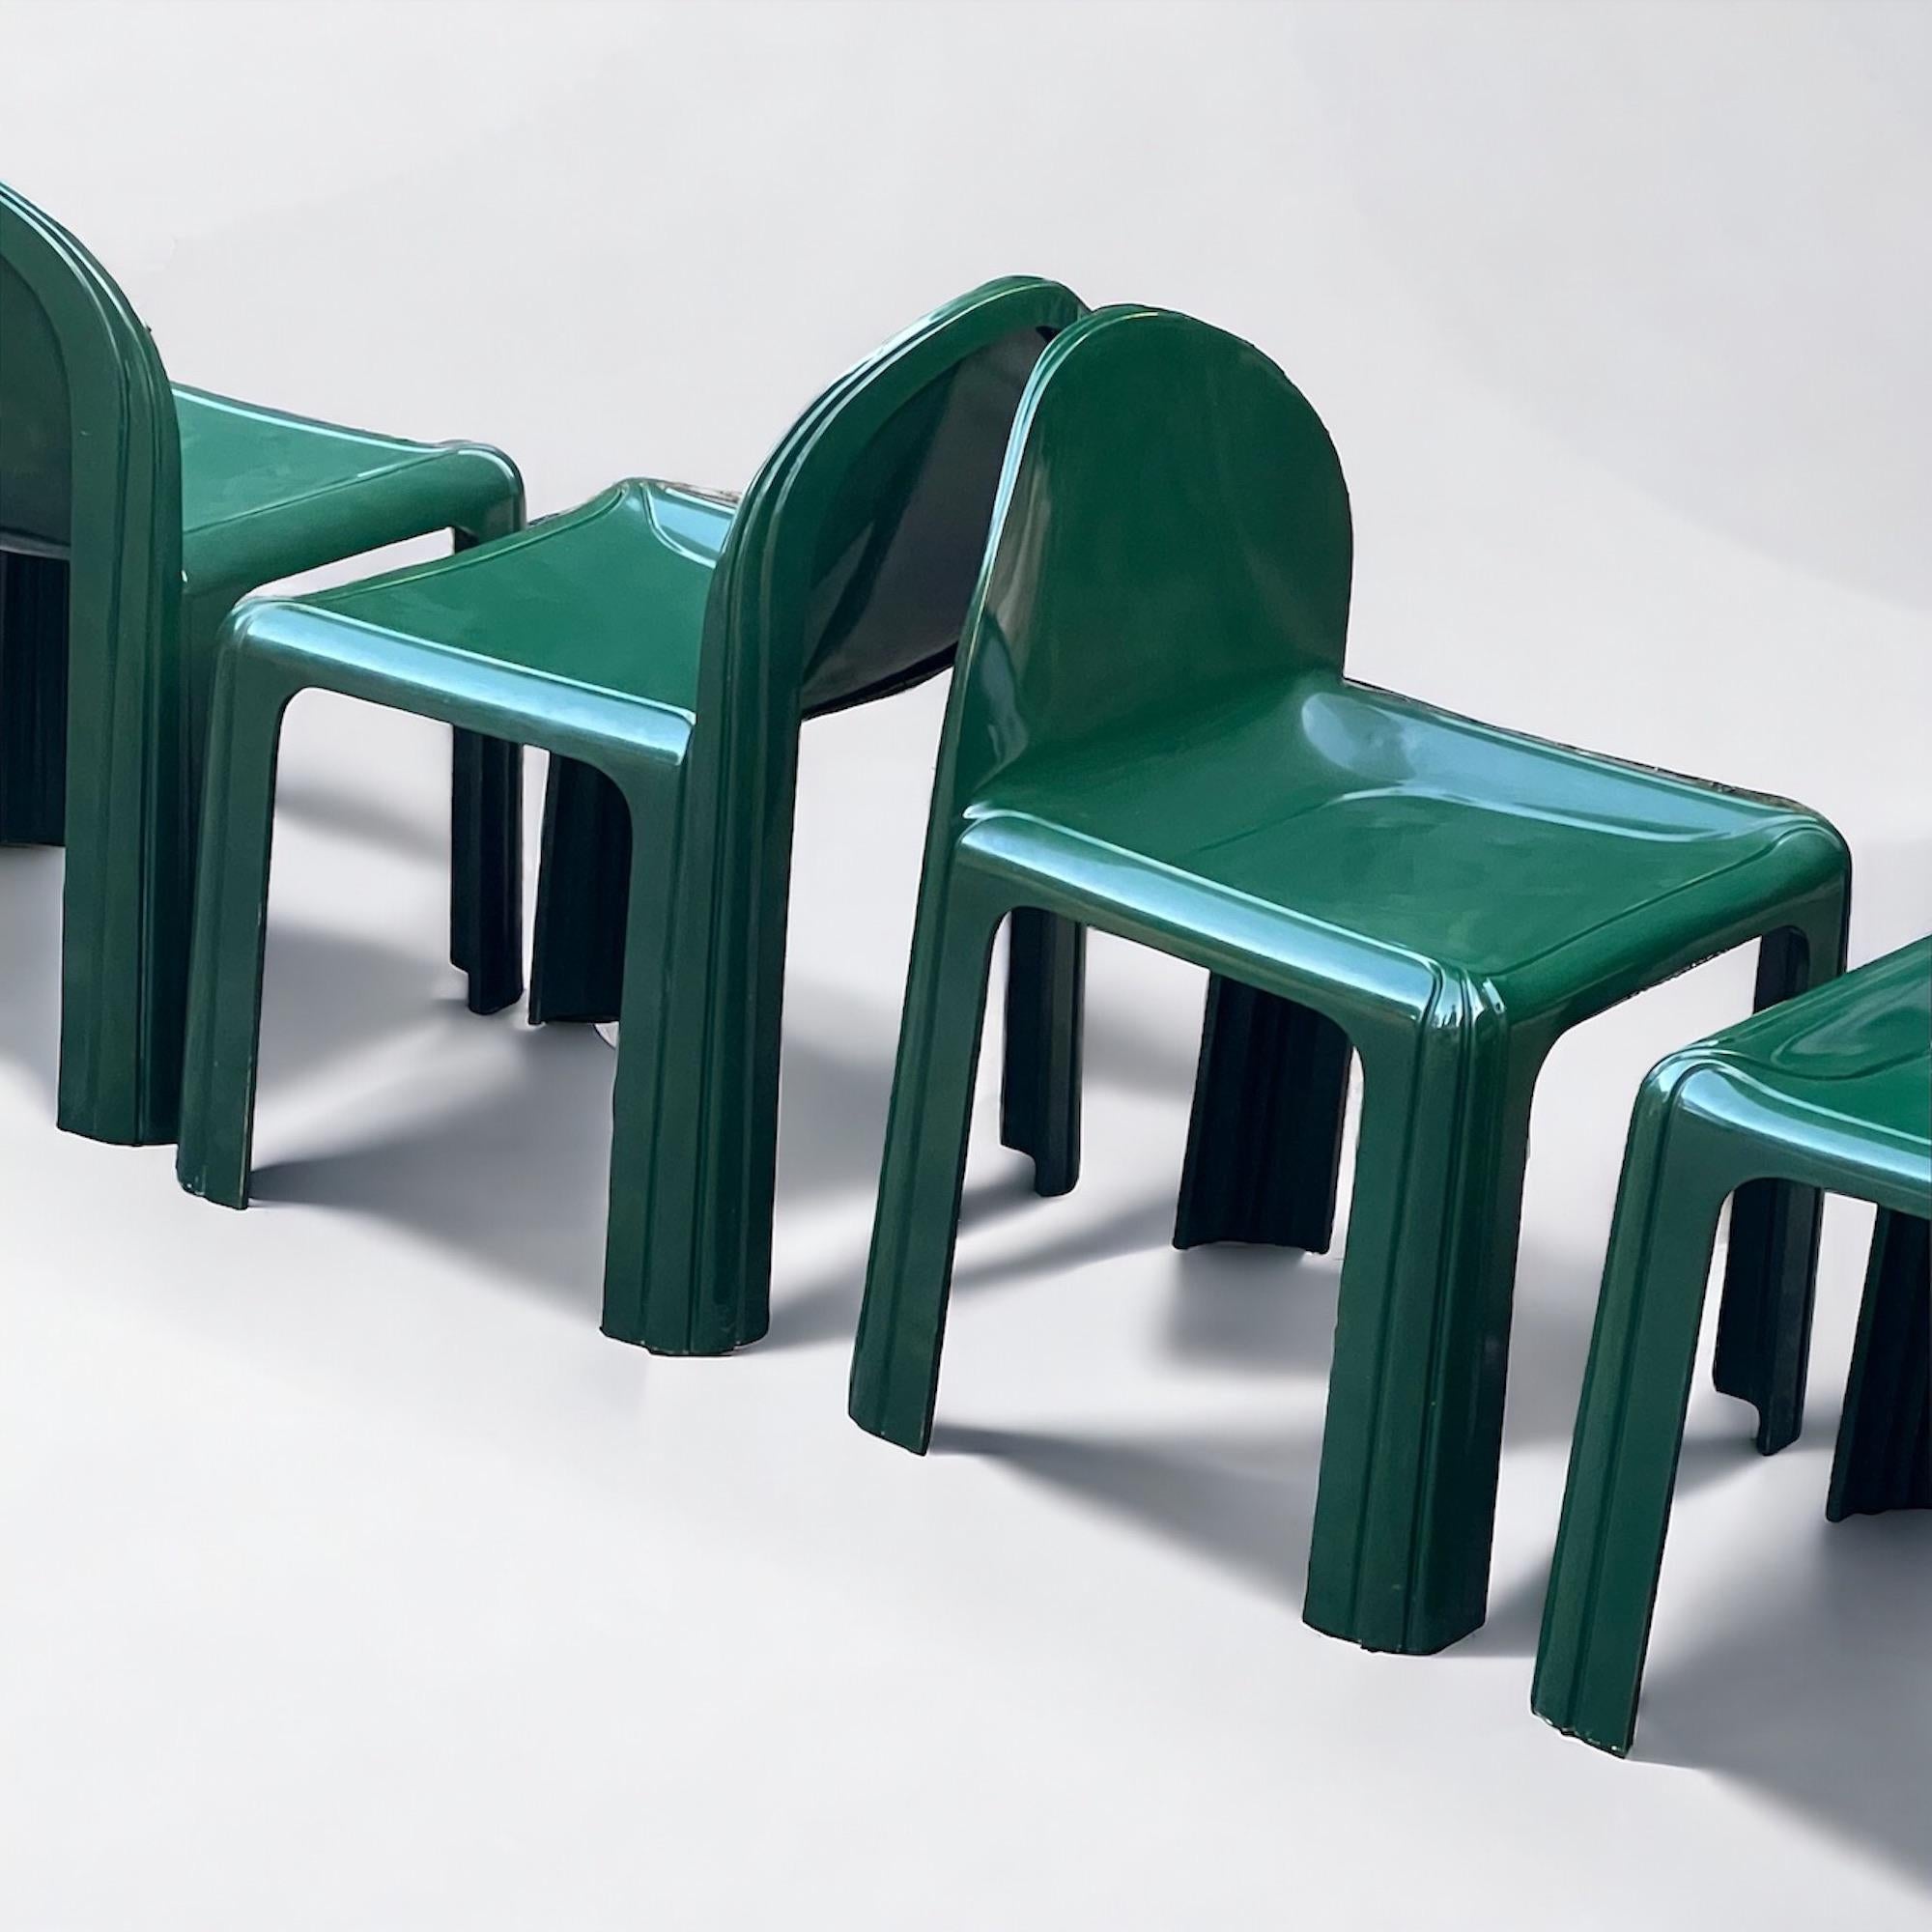 Italian Kartell Model 4854 Chairs by Gae Aulenti, 1960s - Set of 4 - Emerald Green Resin